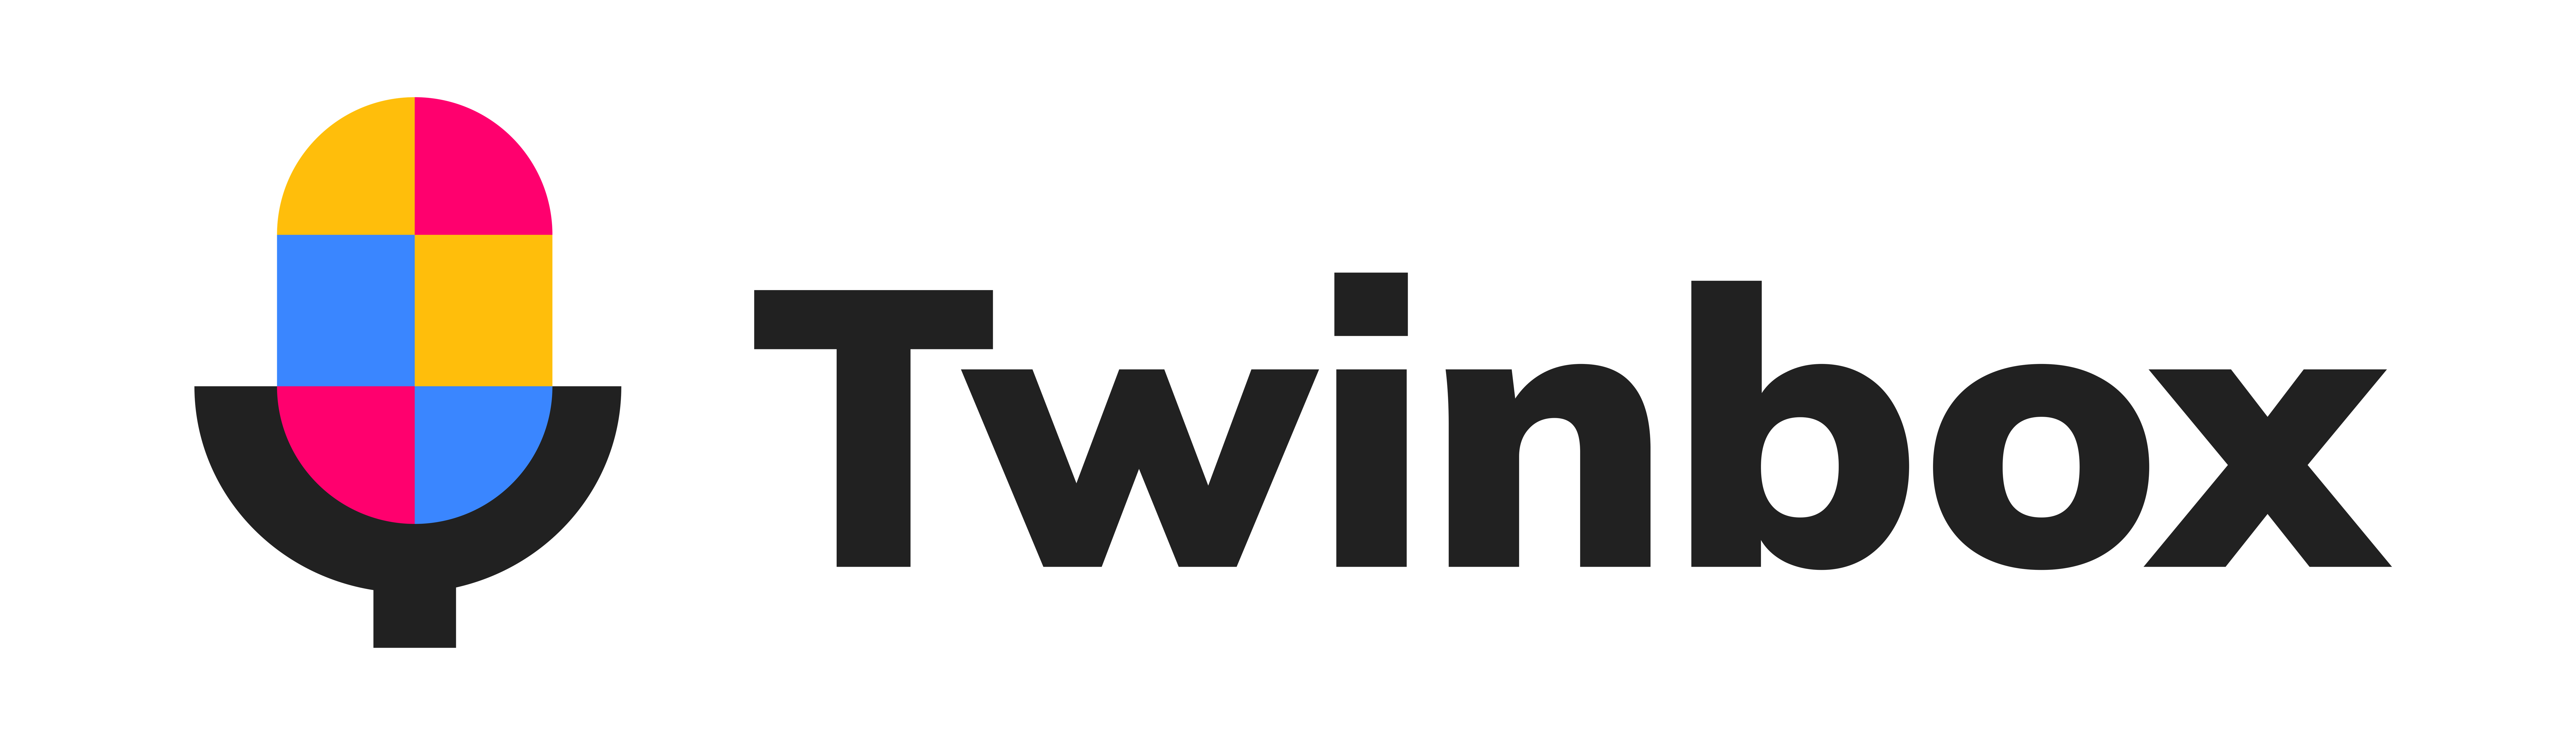 Twinbox-logo